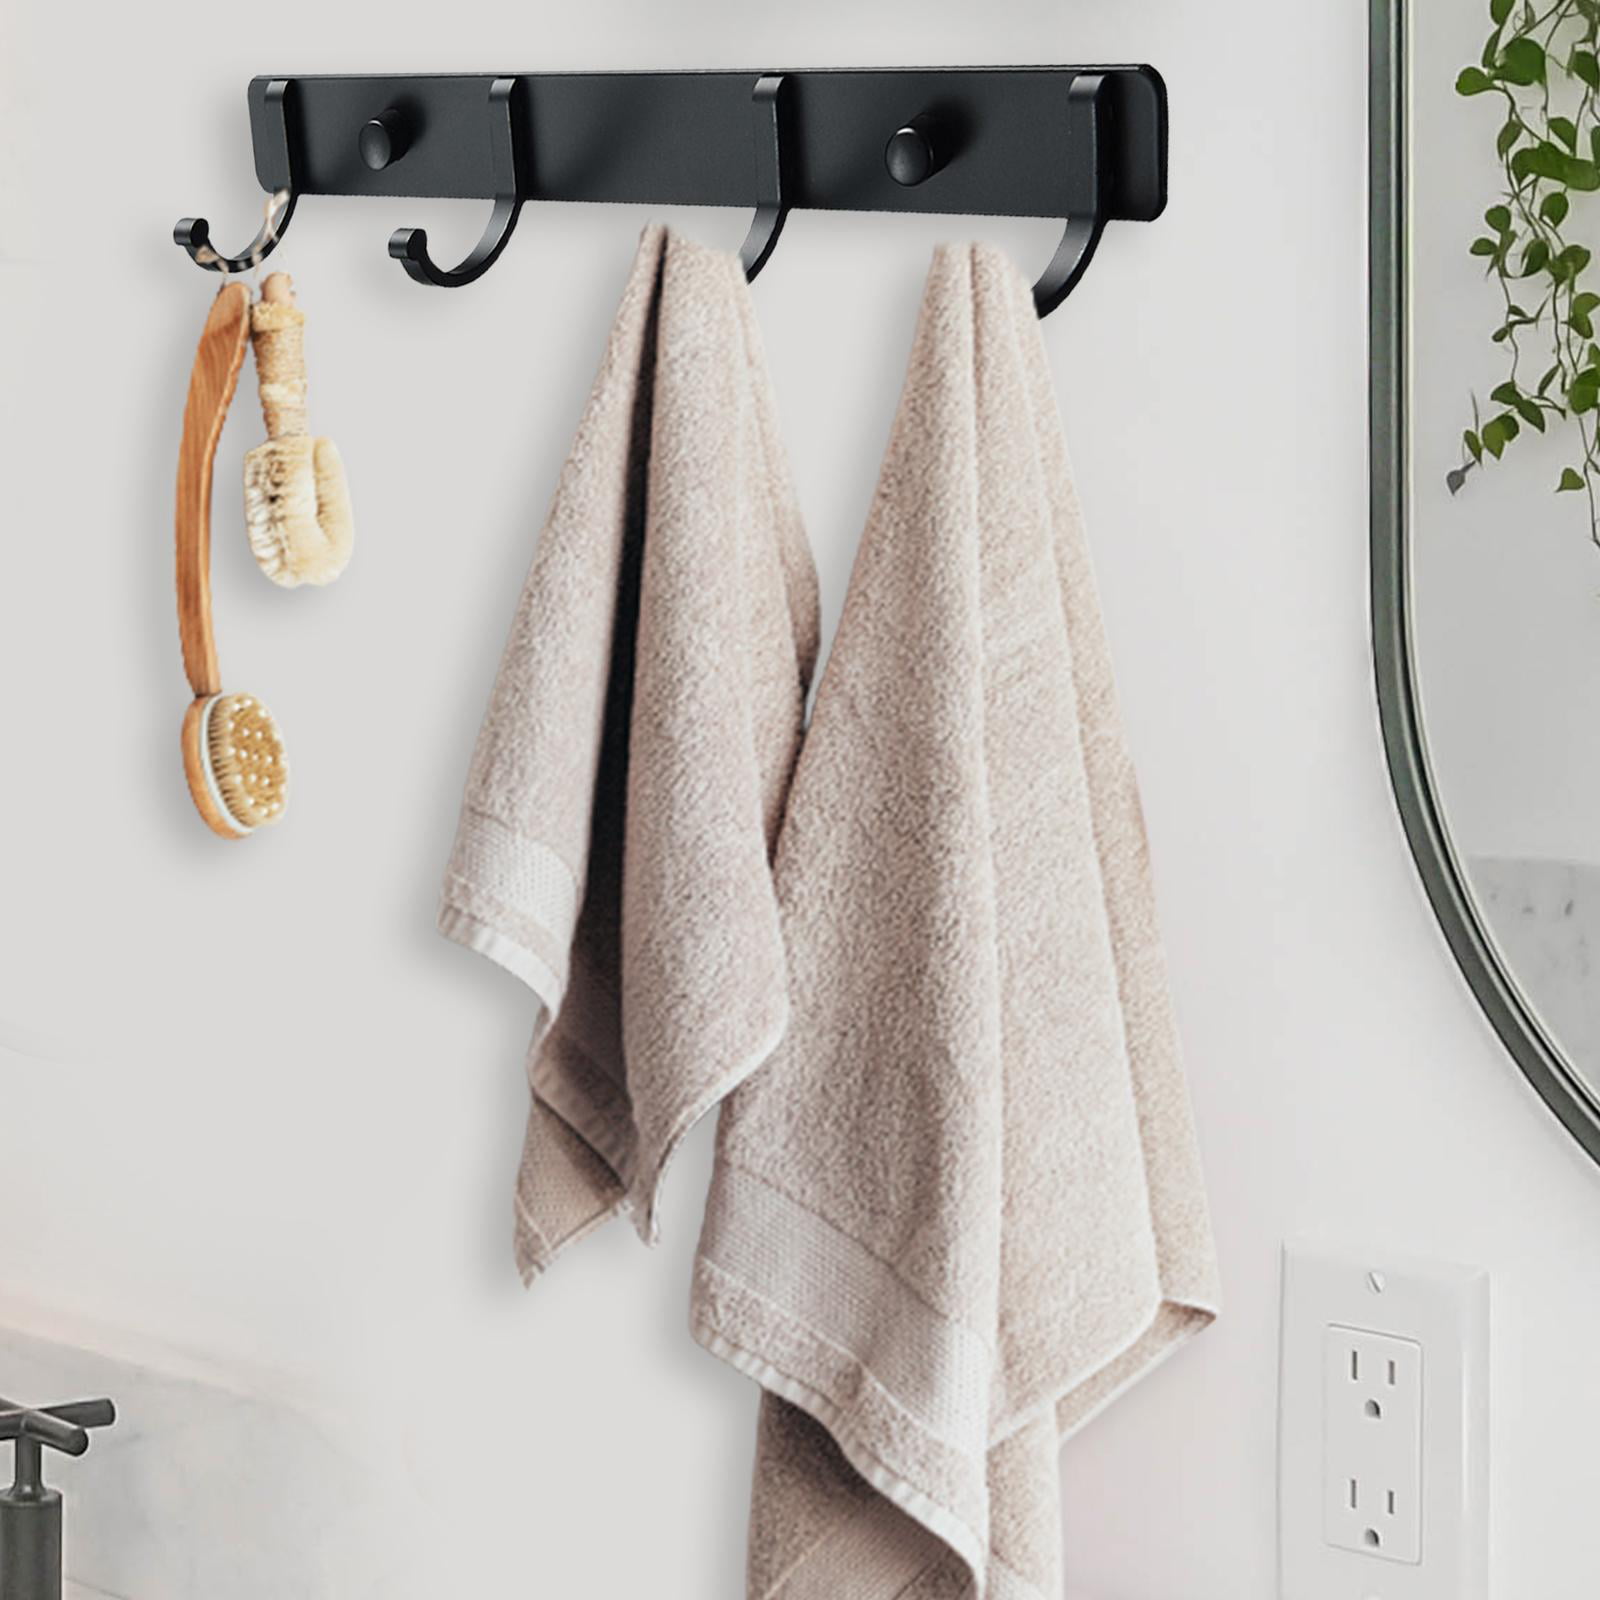 SIMVE Bathroom Towel Rack Wall Mounted, Rustproof Aluminium Shelf with 5  Bath Robe Hook, Decor Display Storage, Hanging Hanger for Hat, Key, Bag